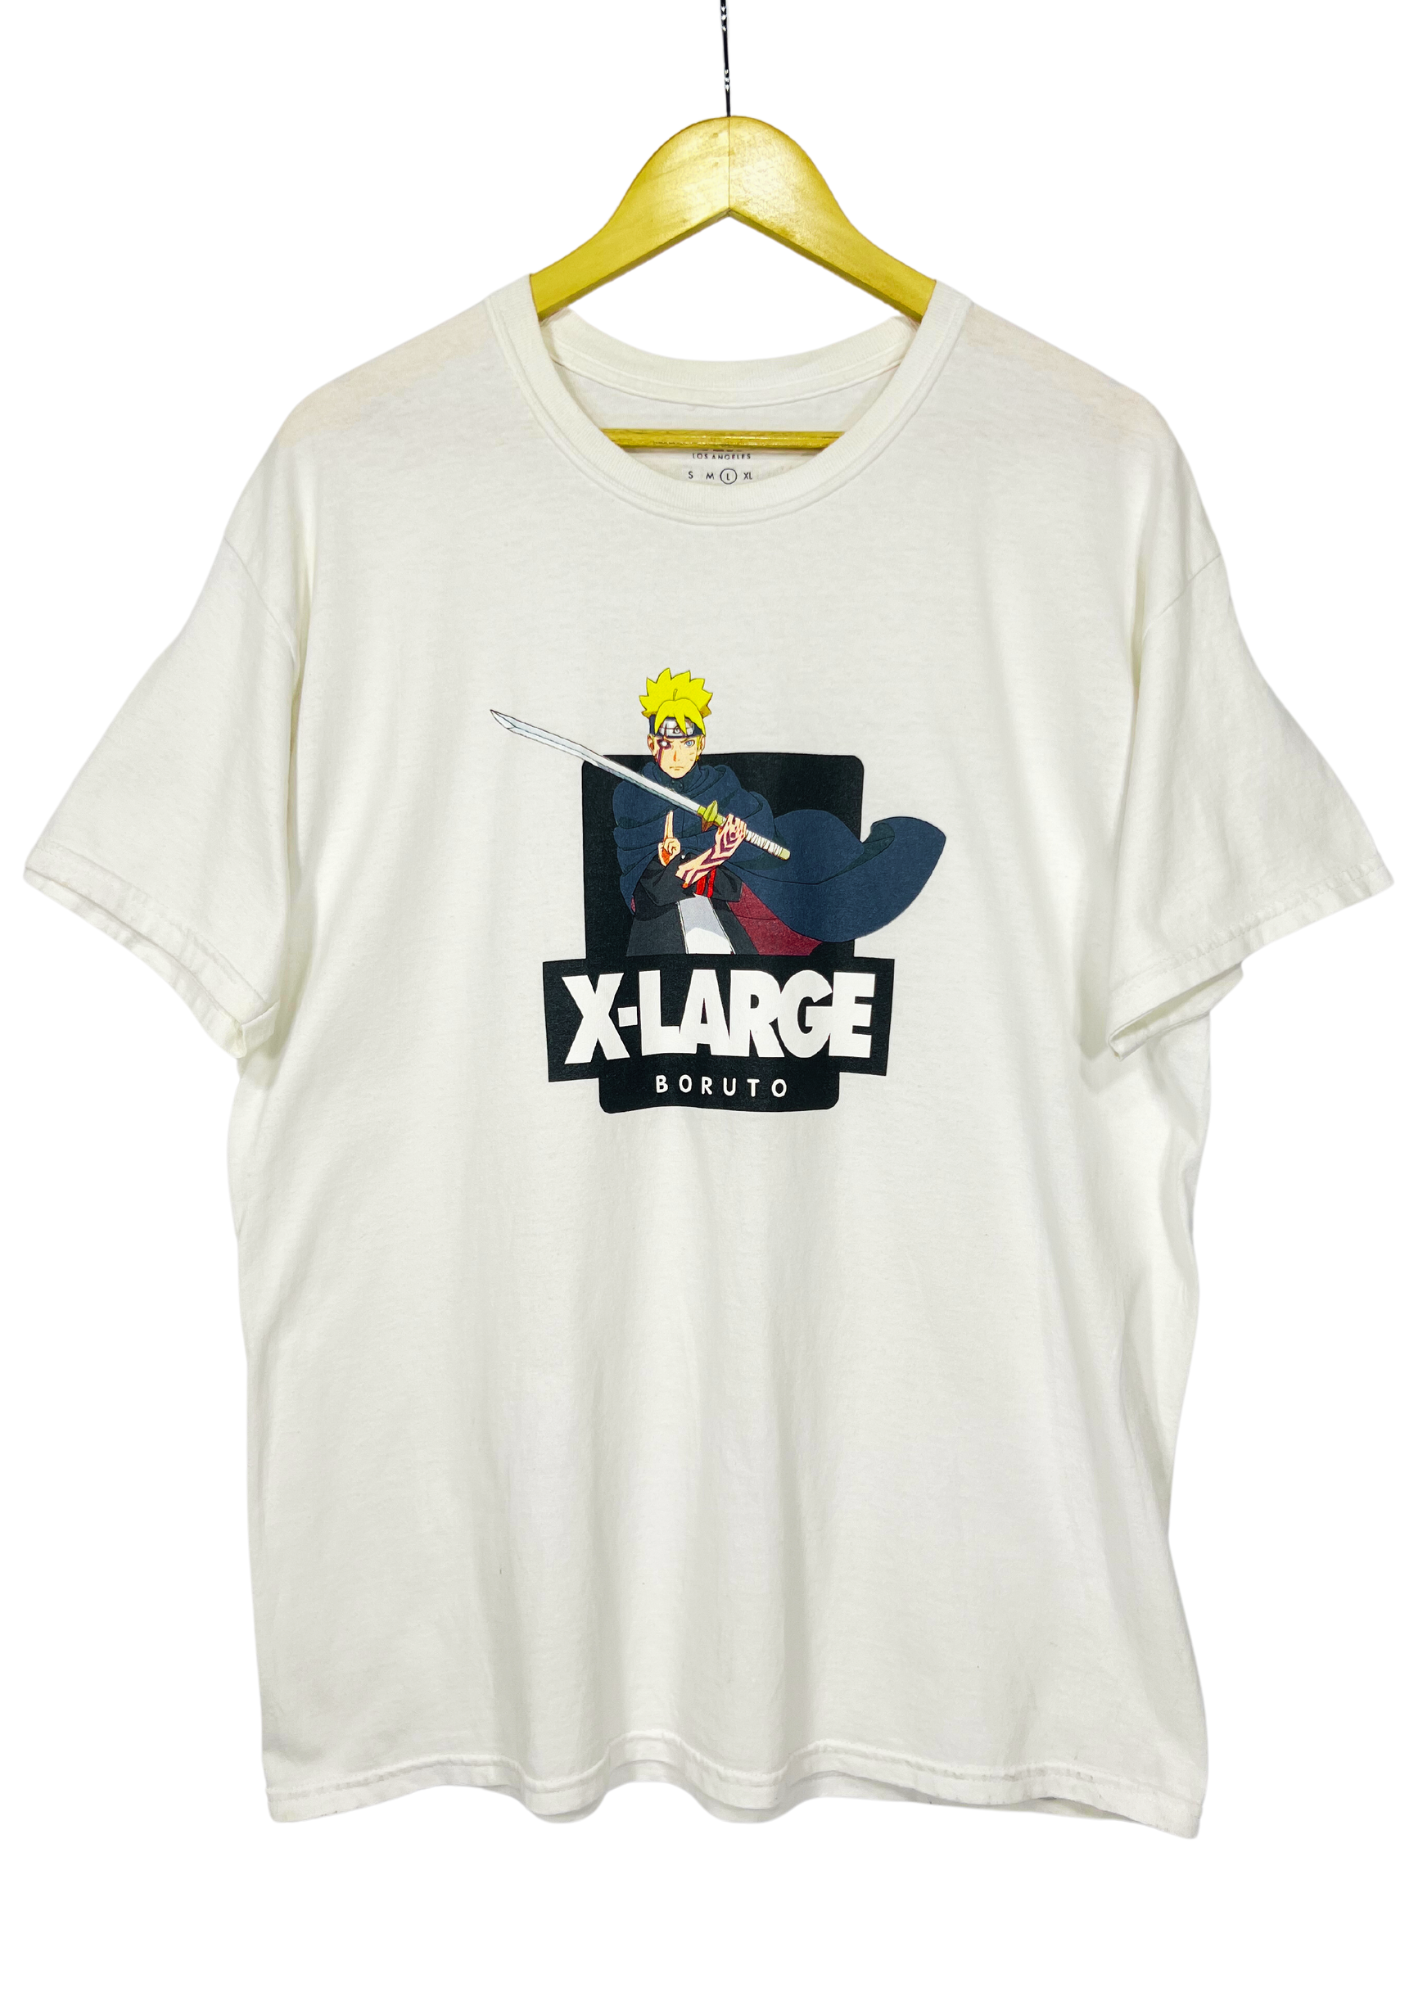 Naruto x X-Large Boruto T-shirt